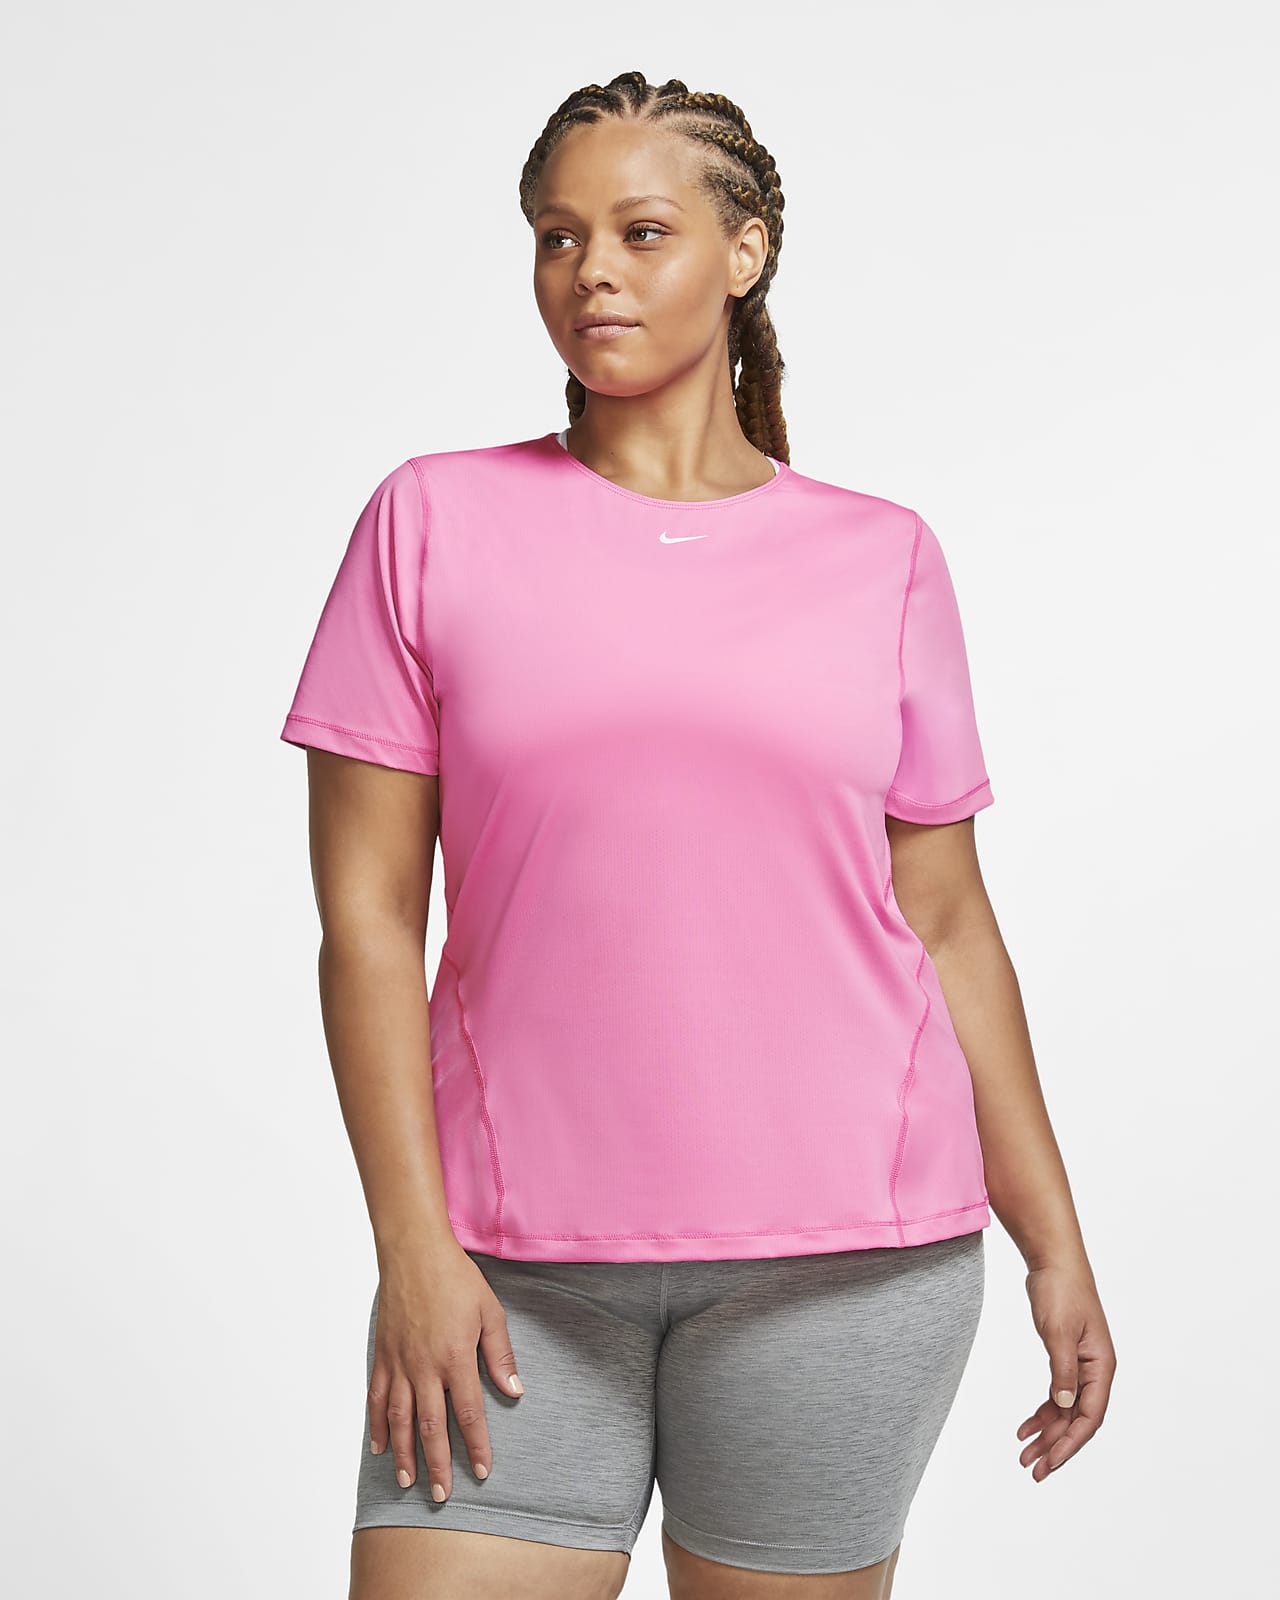 Nike Pro Women's Mesh Top (Plus Size 